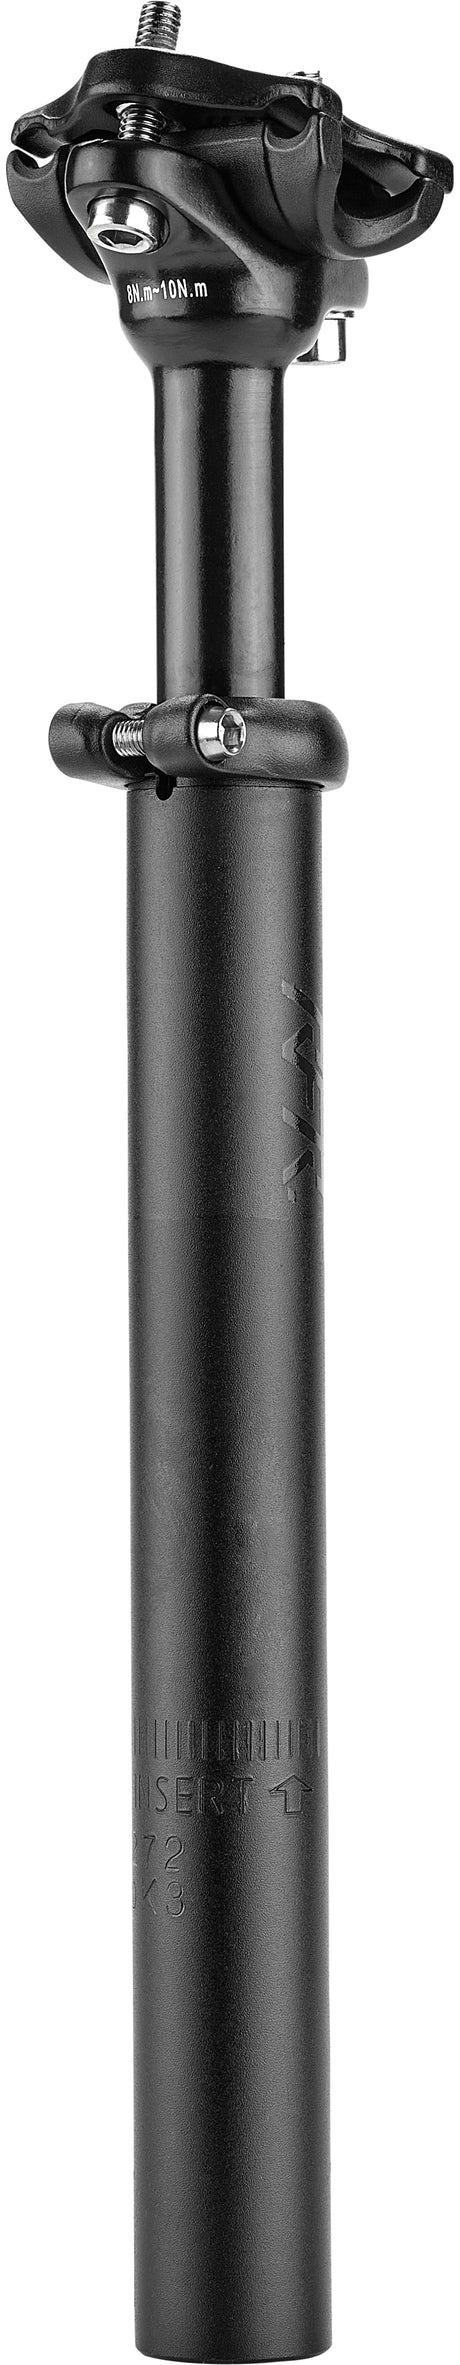 RFR Gefederte Sattelstütze (60 - 90 kg) black